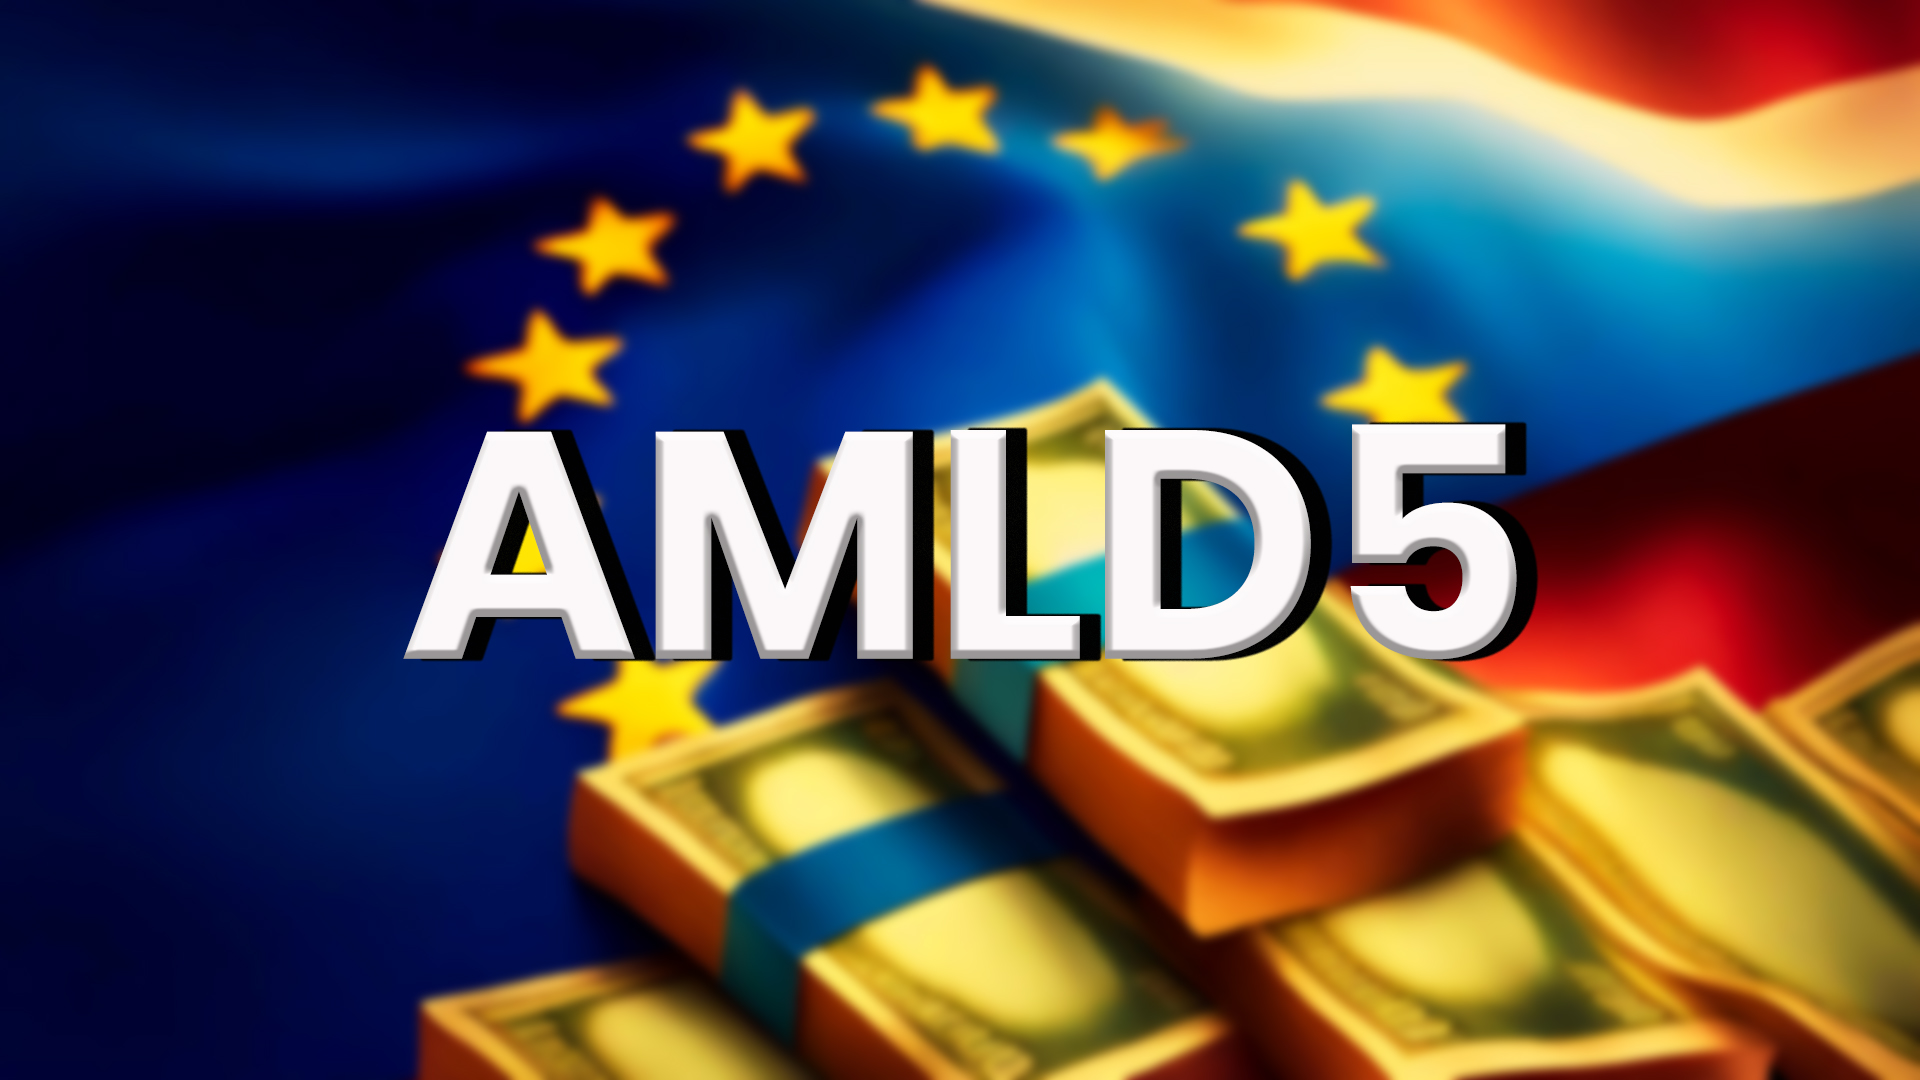 5AMLD in the European Union: Strengthening Financial Integrity